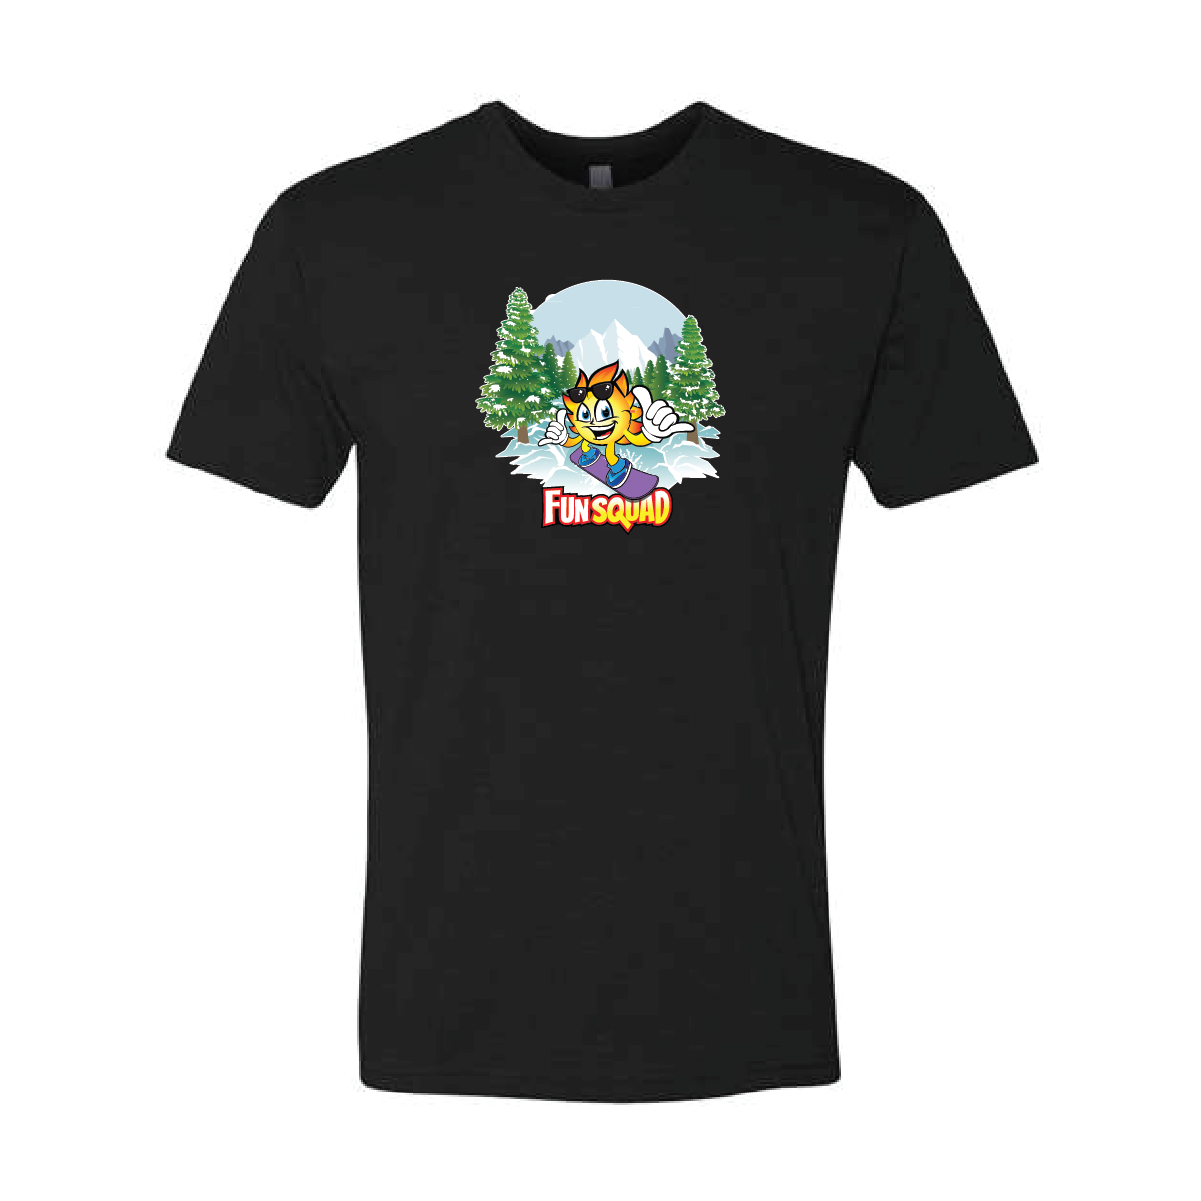 T-shirt Classic - Sunny Boy Snowboard